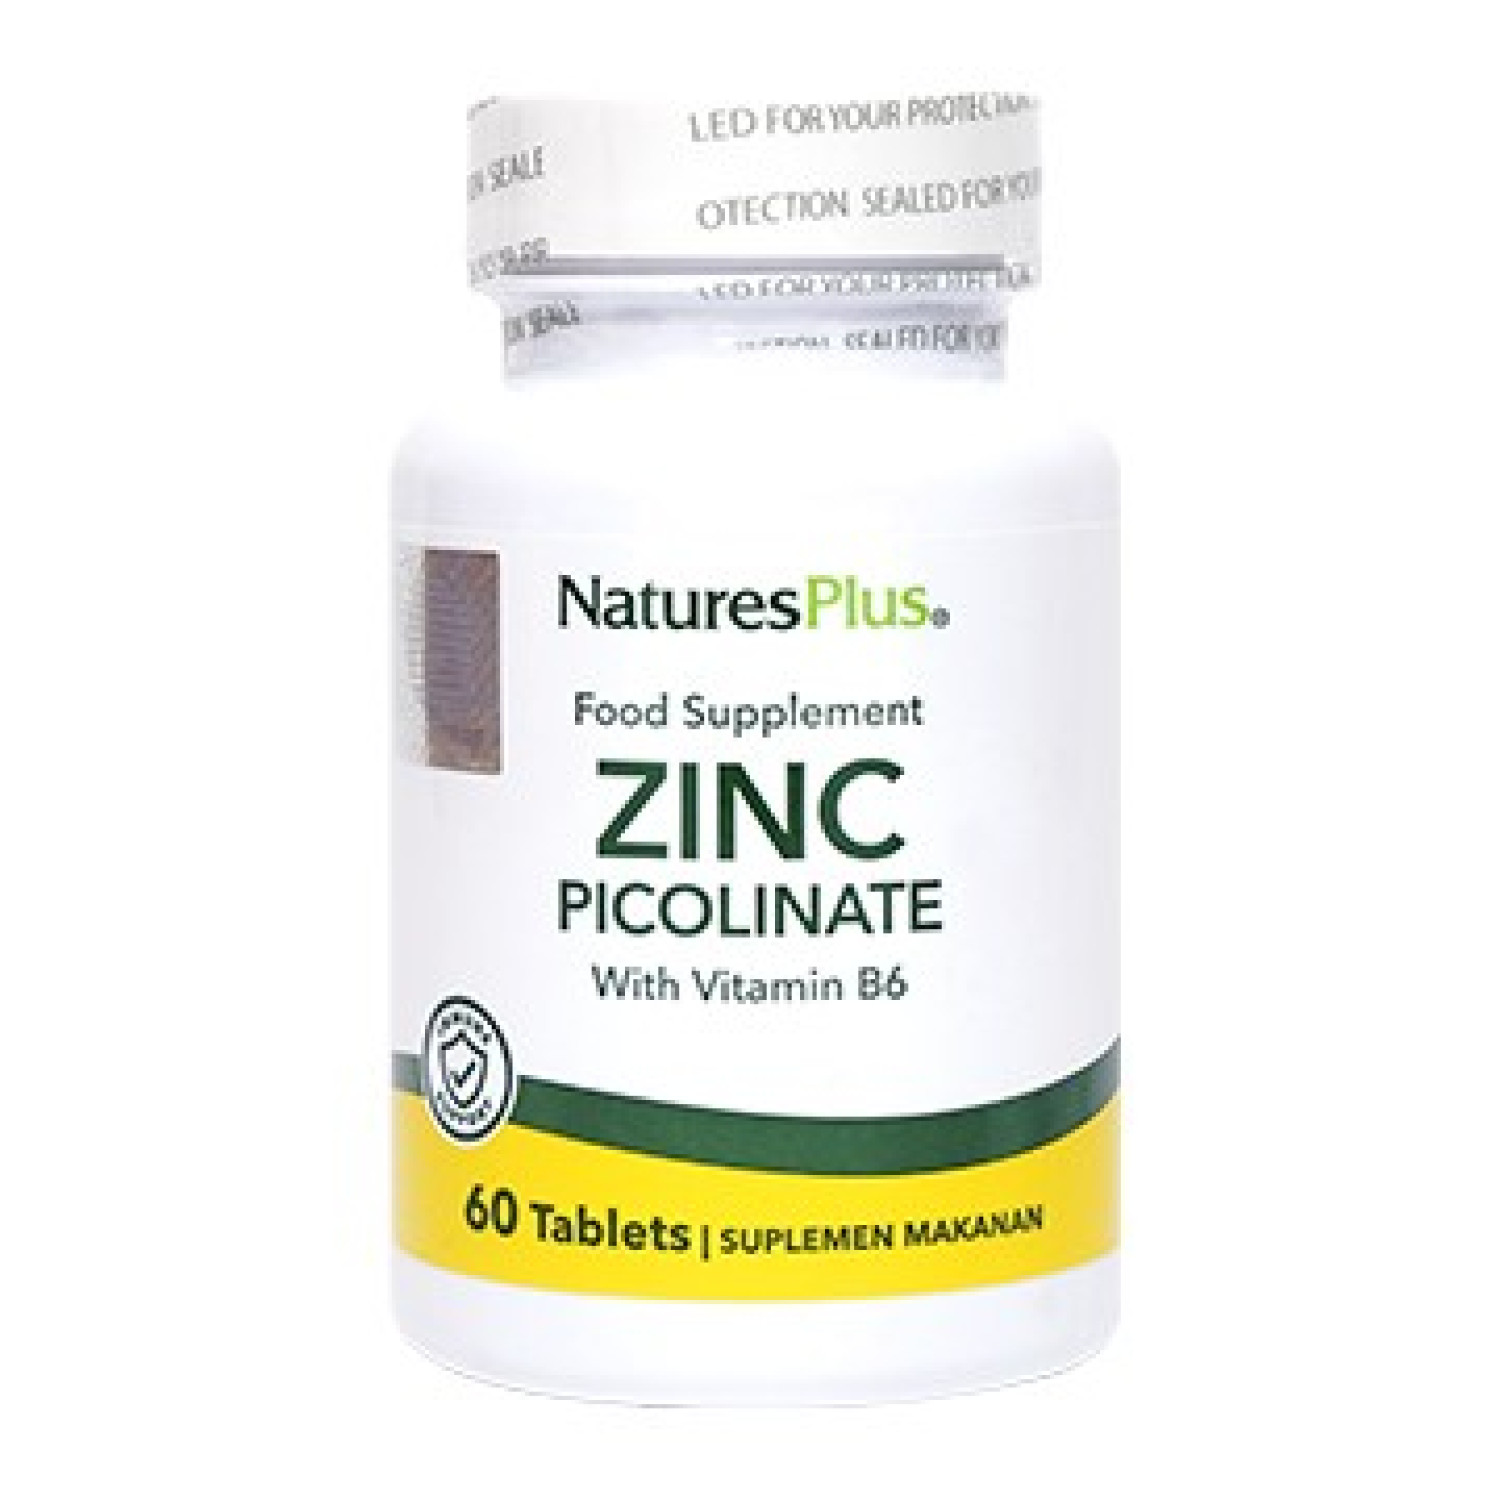 natures-plus-zinc-picolinate-60-tablets-6566b37daedb0.jpeg